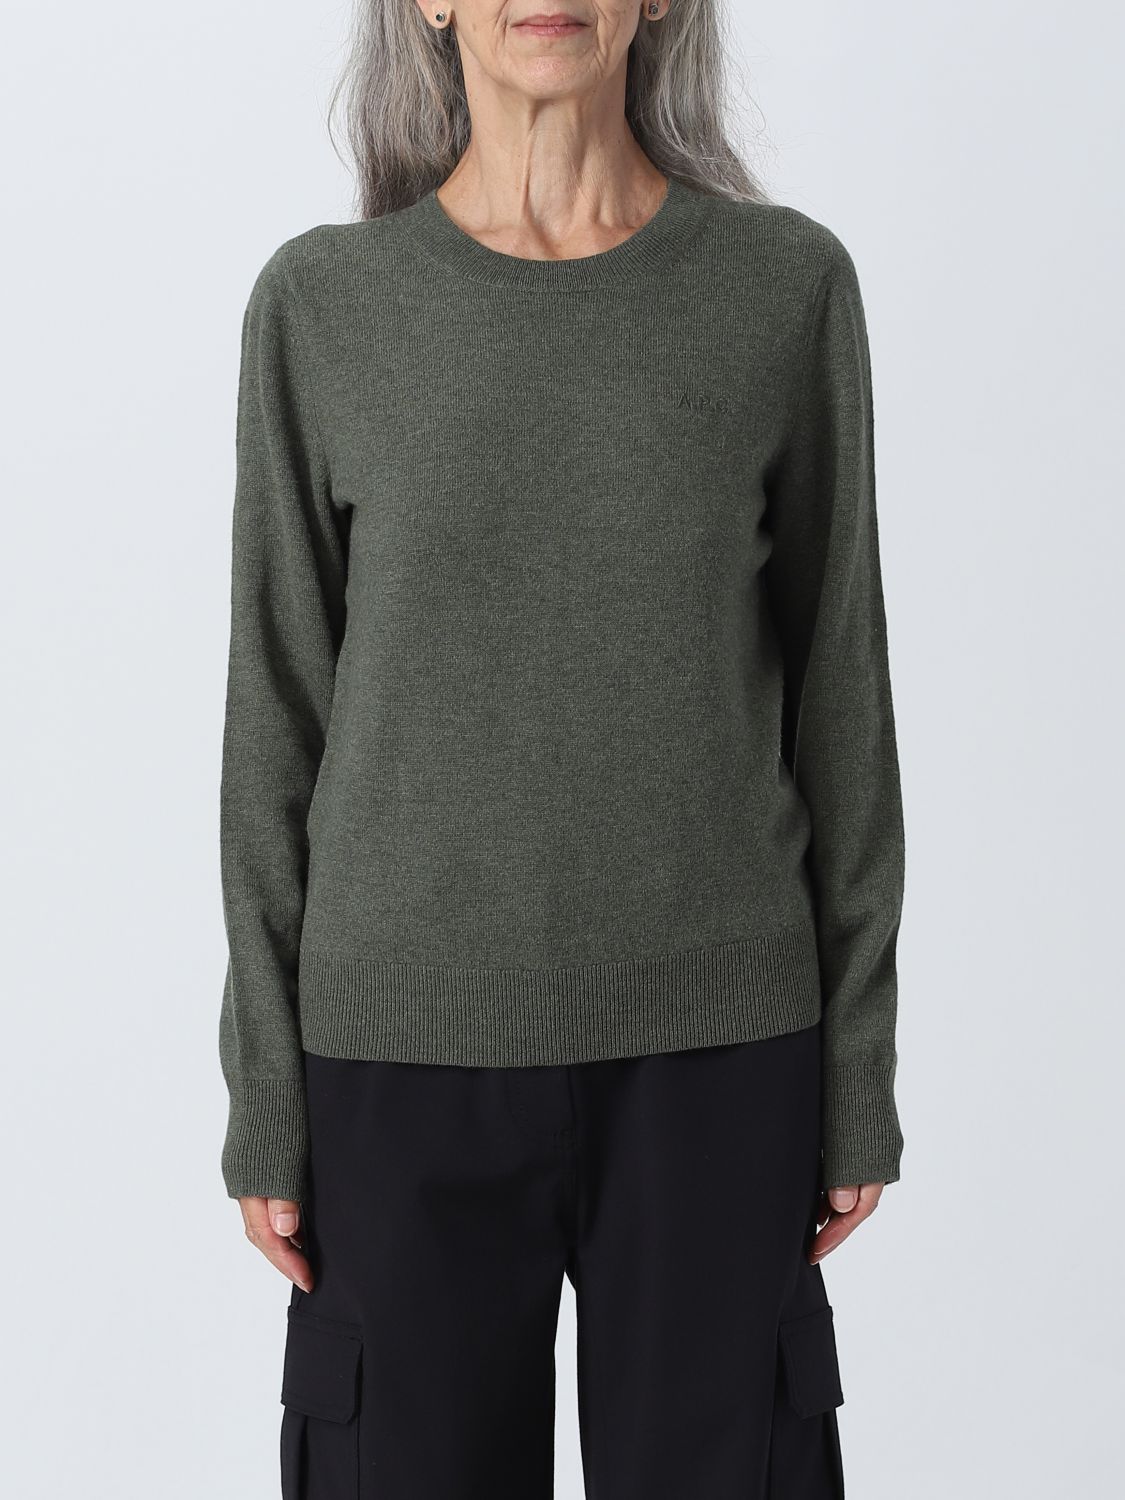 Apc Sweater A.p.c. Woman Color Green